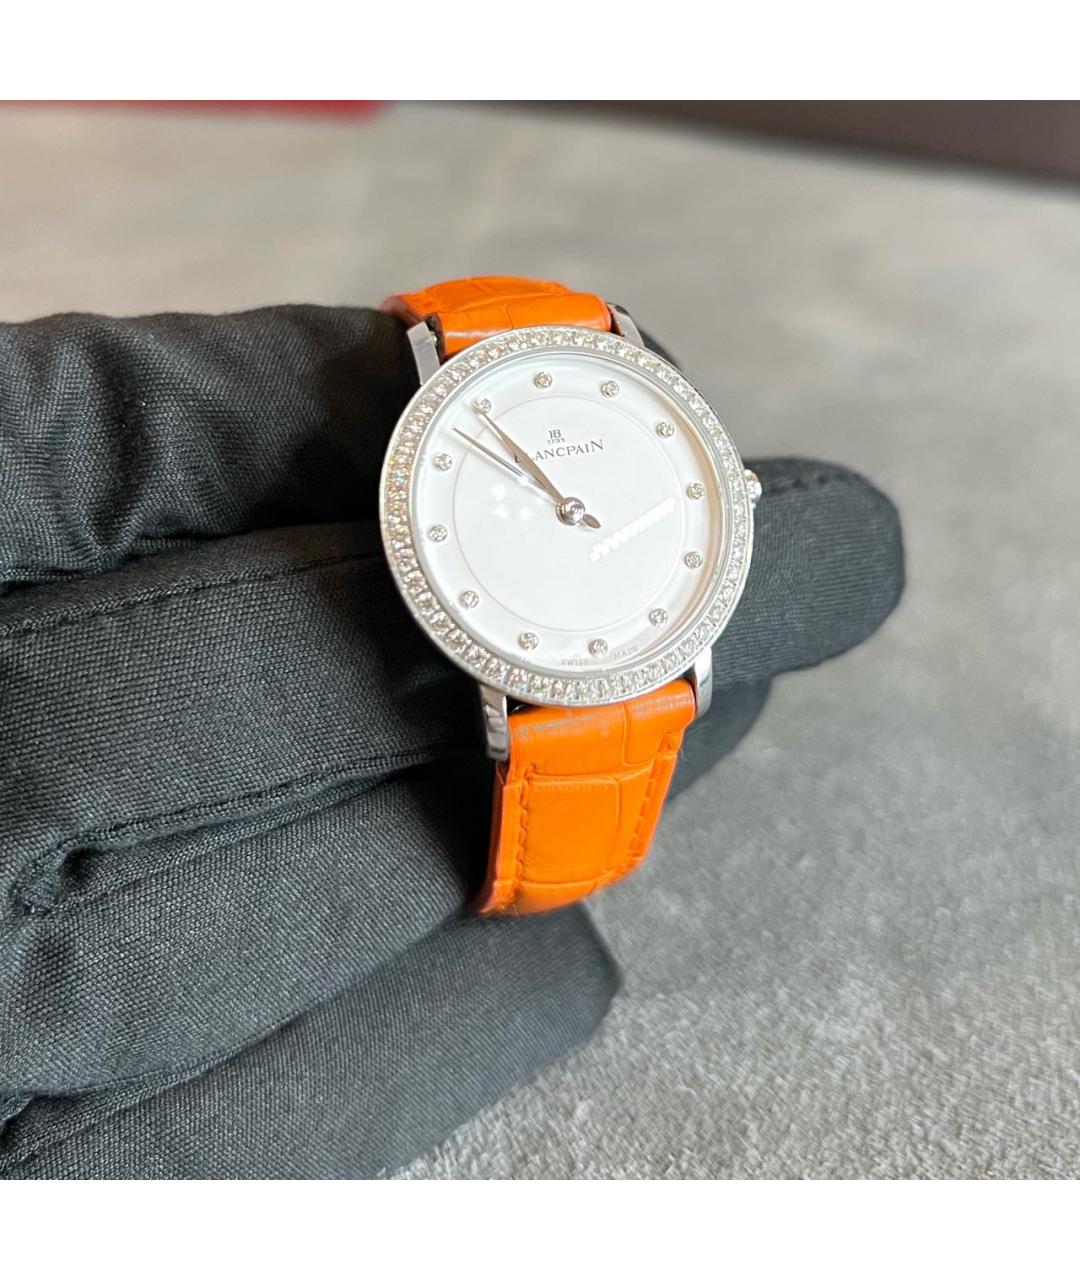 Blancpain Оранжевое металлические часы, фото 3